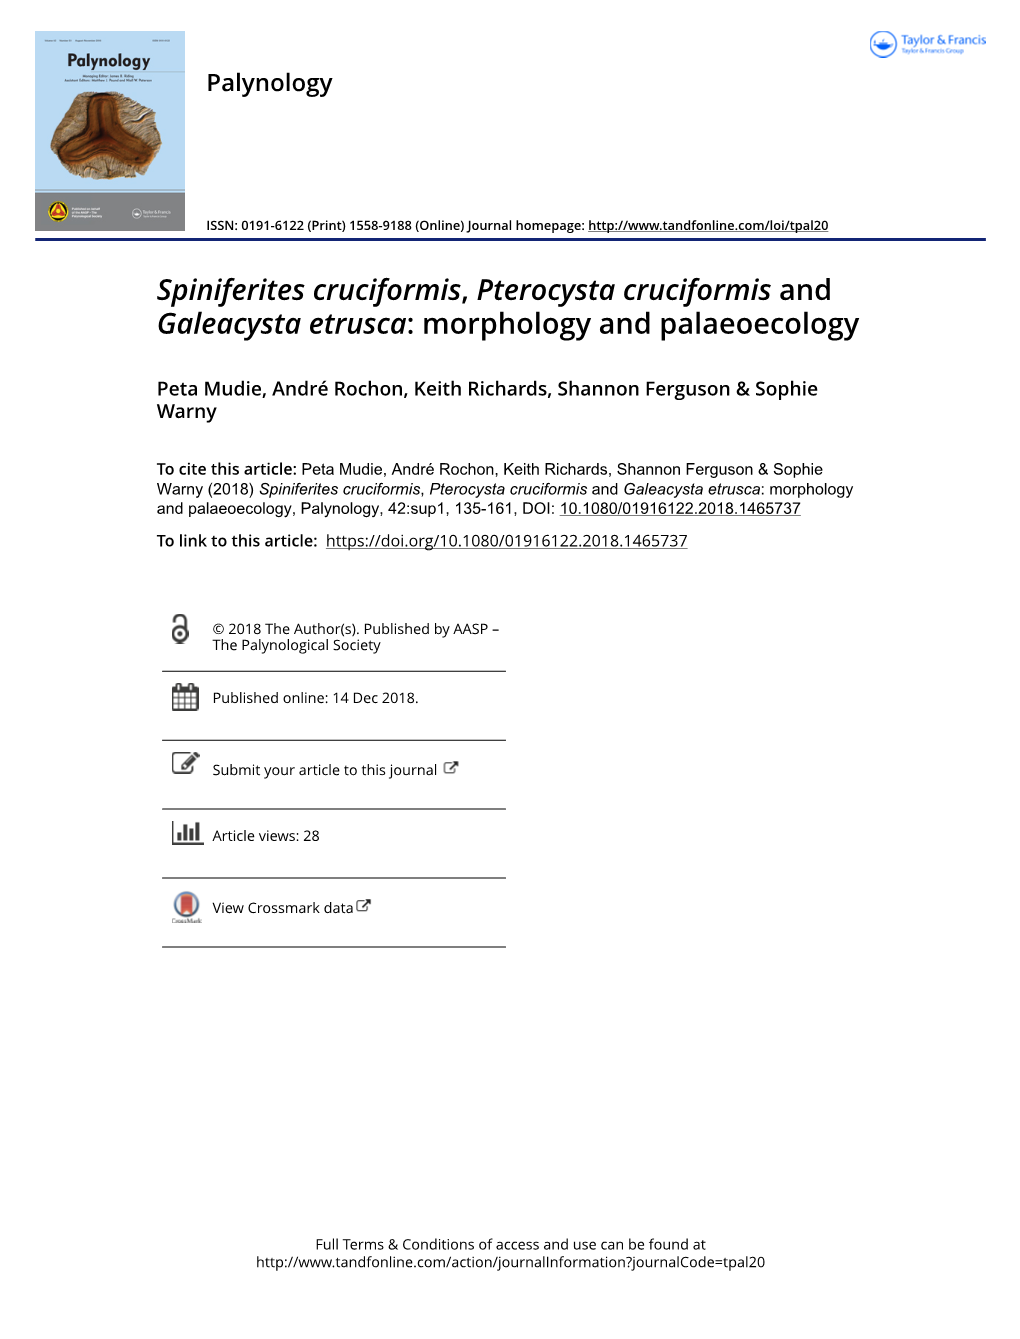 Spiniferites Cruciformis, Pterocysta Cruciformis and Galeacysta Etrusca: Morphology and Palaeoecology